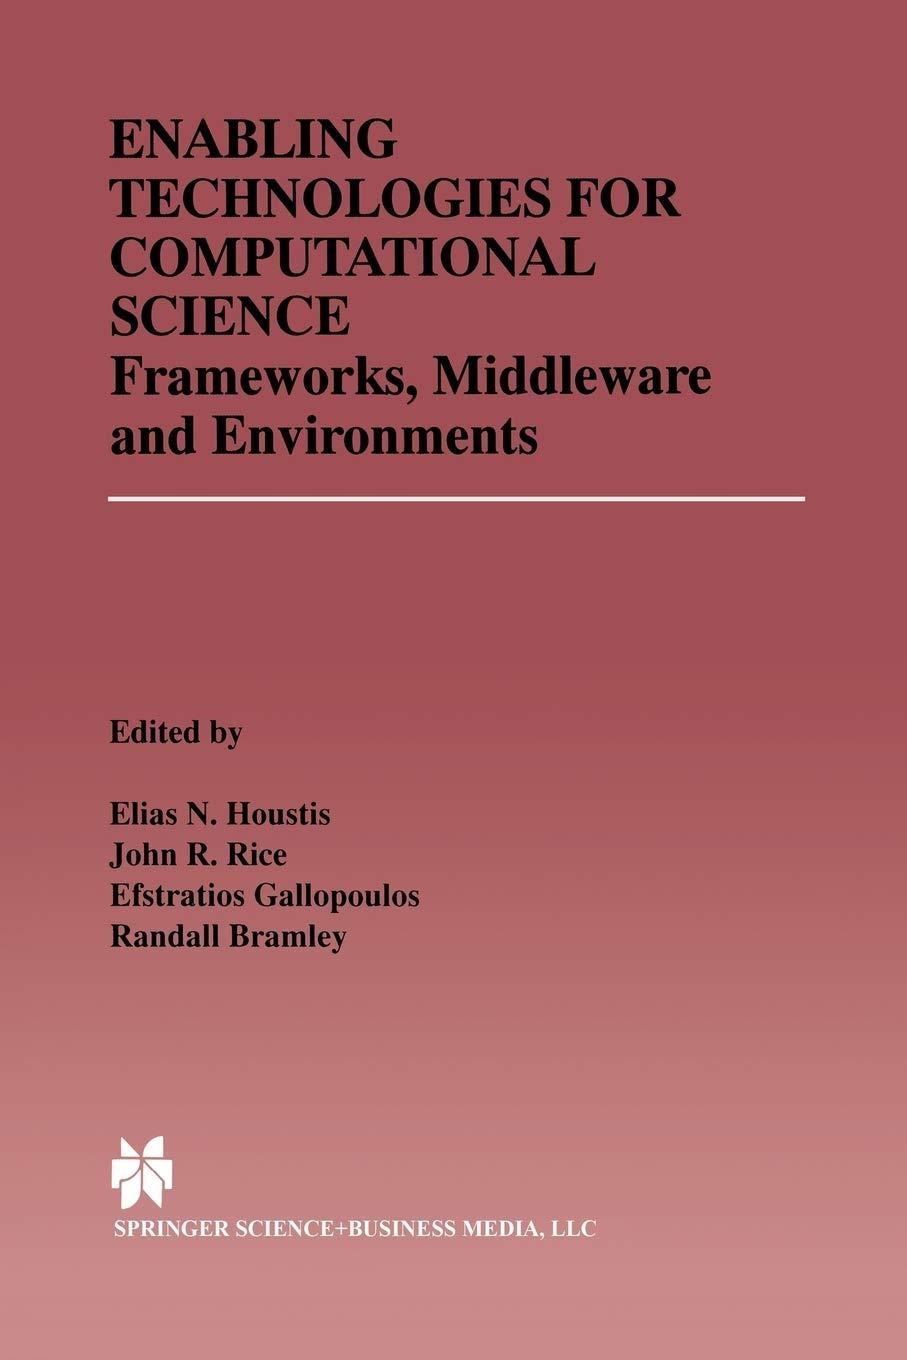 enabling technologies for computational science 2000 edition elias n. houstis, john r. rice, efstratios